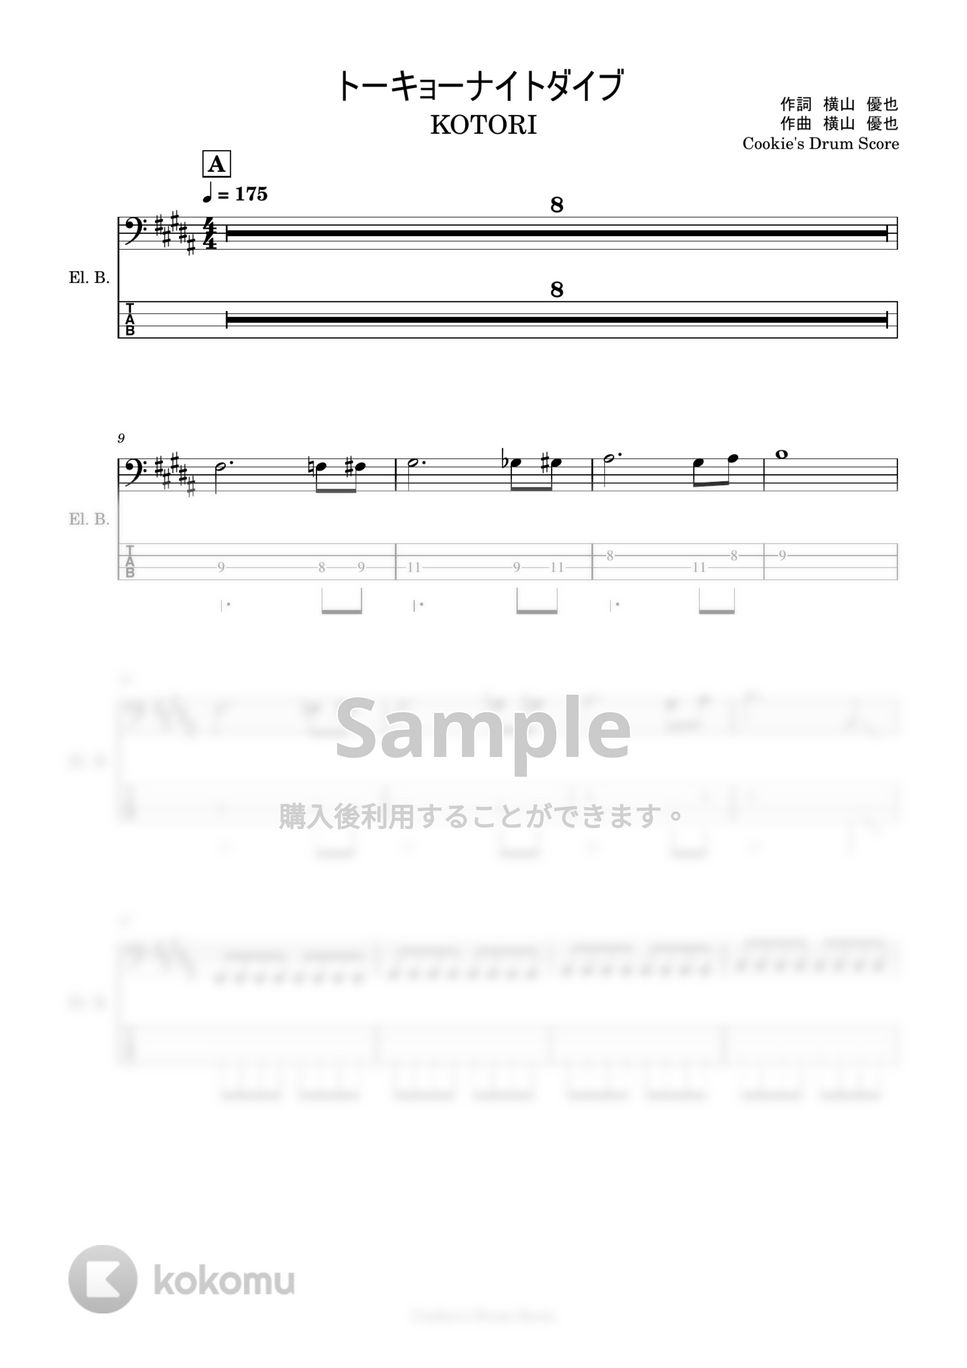 KOTORI - 【ベース楽譜】 トーキョーナイトダイブ / KOTORI - Tokyo night dive / KOTORI 【BassScore】 by Cookie's Drum Score